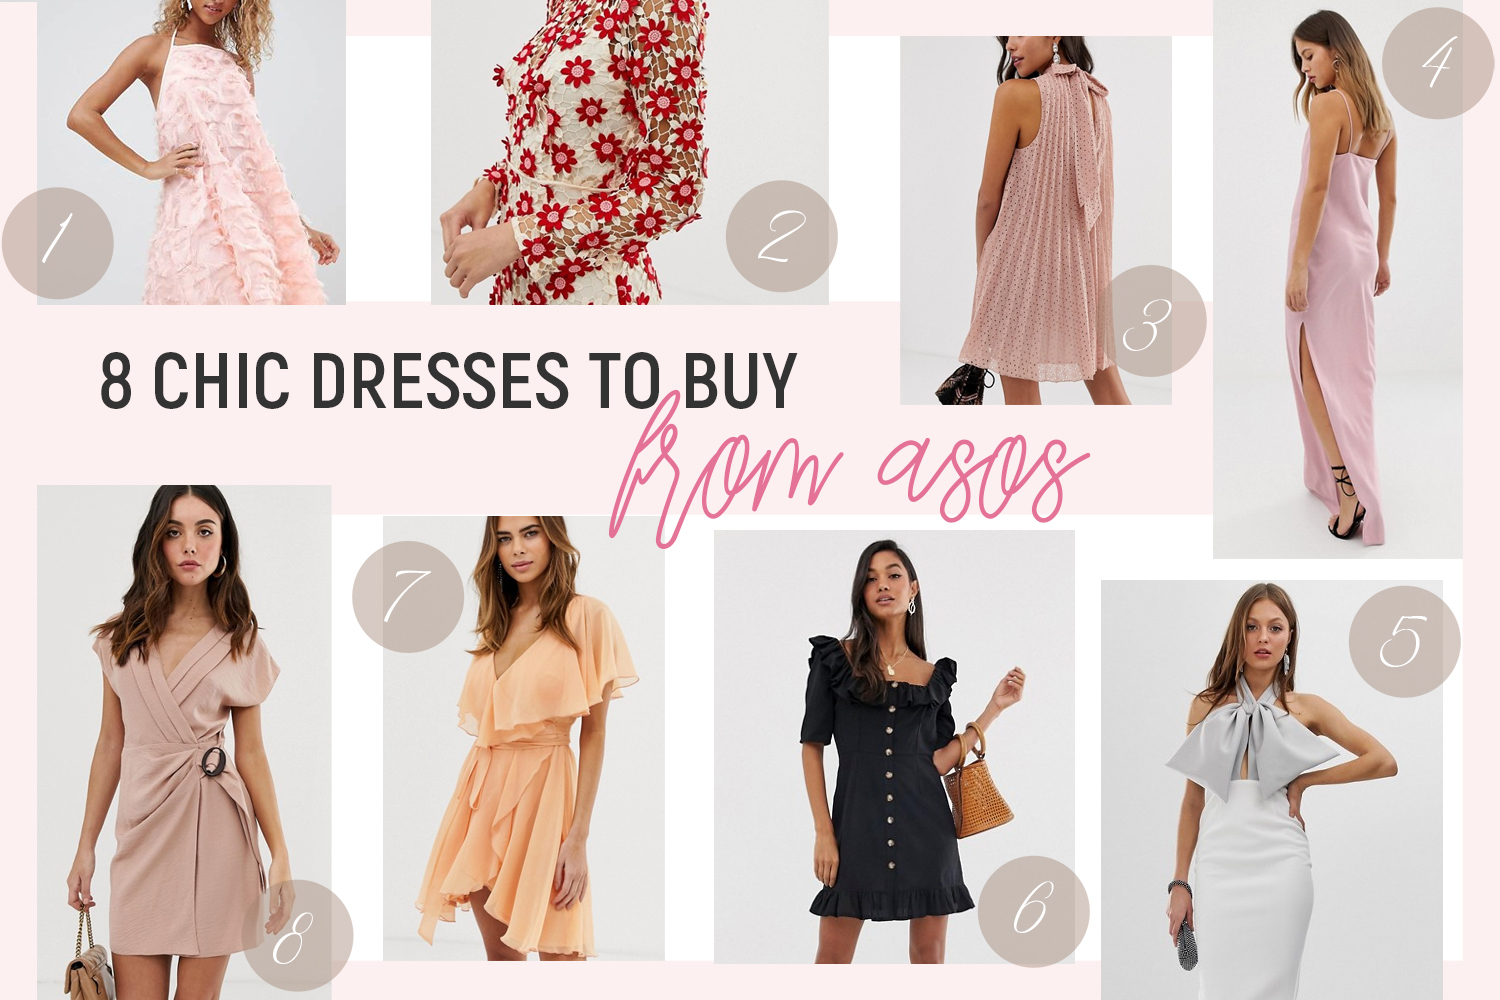 8 Chic Dresses to buy from Asos by Tamara Bellis